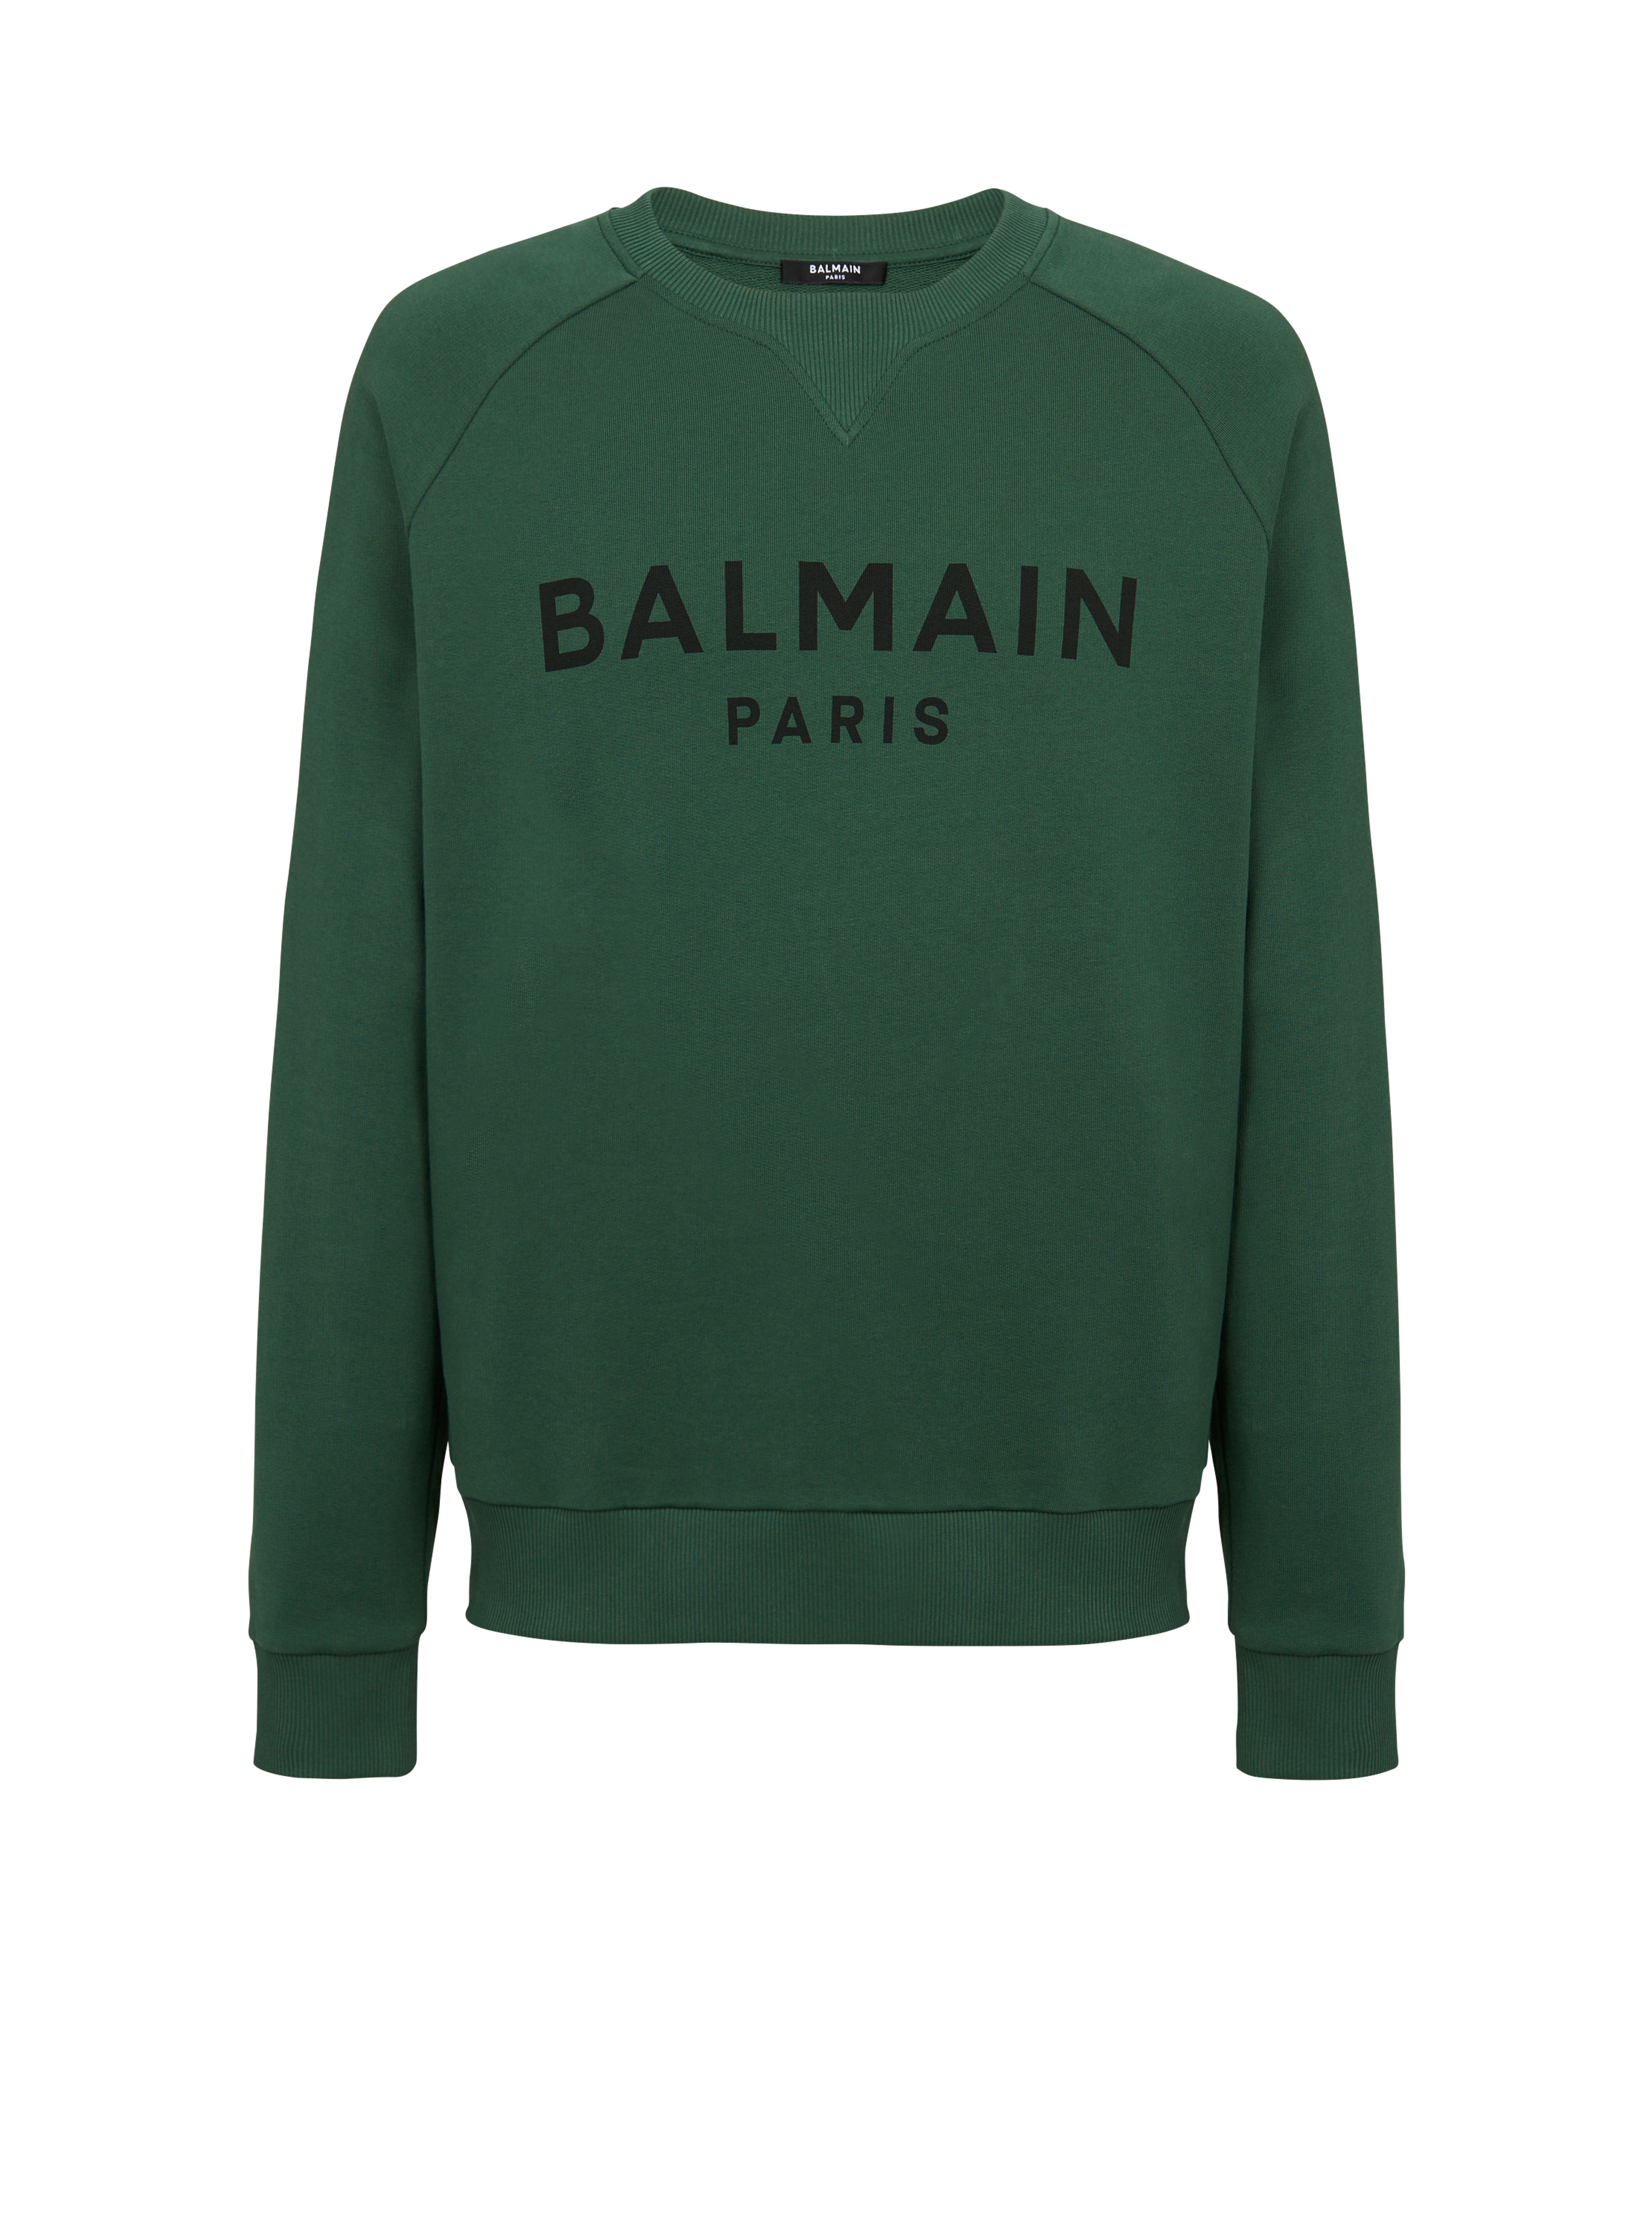 Eco-designed cotton sweatshirt with Balmain Paris metallic logo print, green